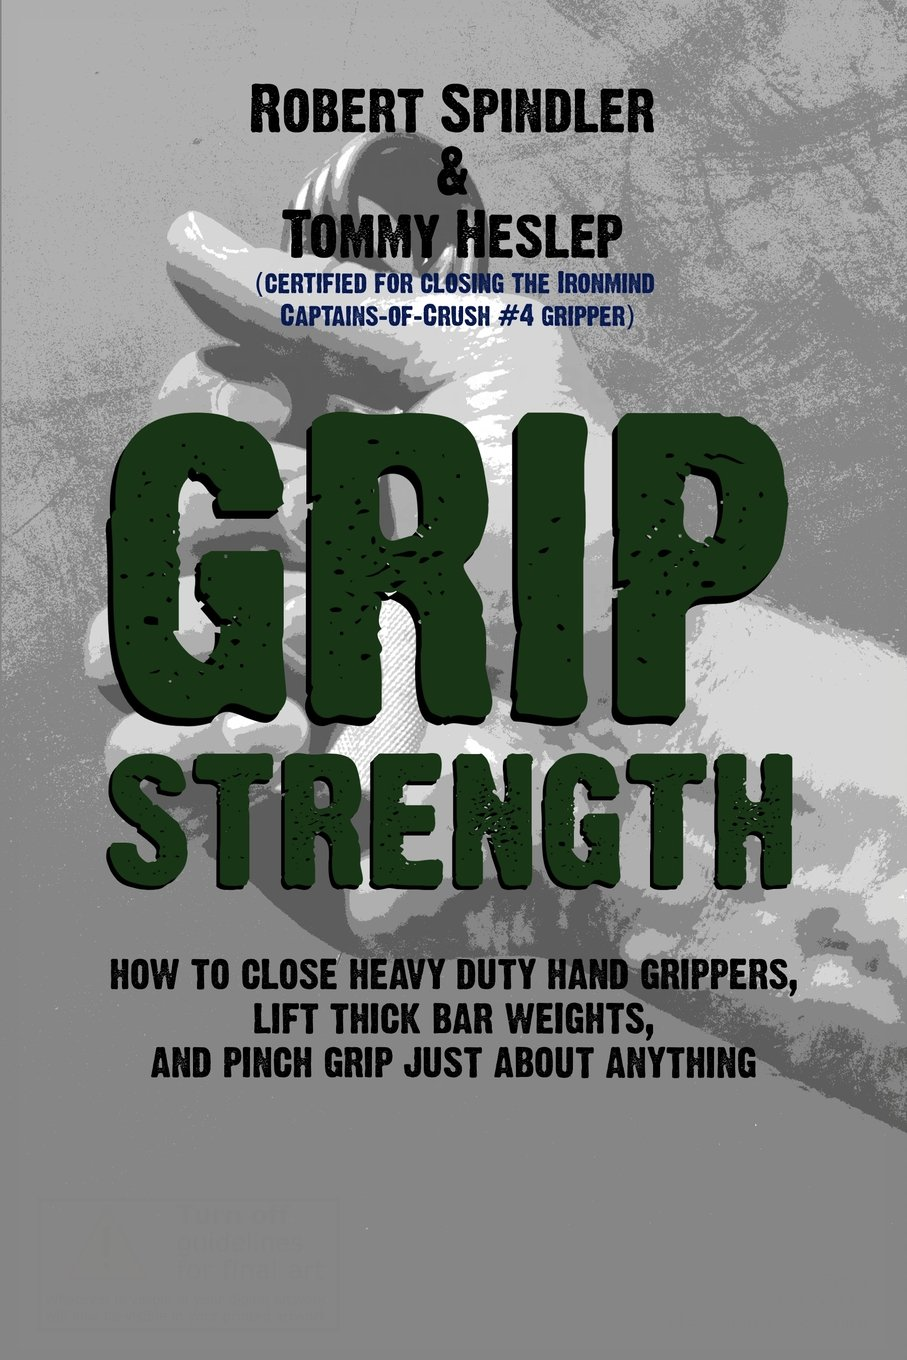 "Grip Strength", by Robert Spindler & Tommy Heslep